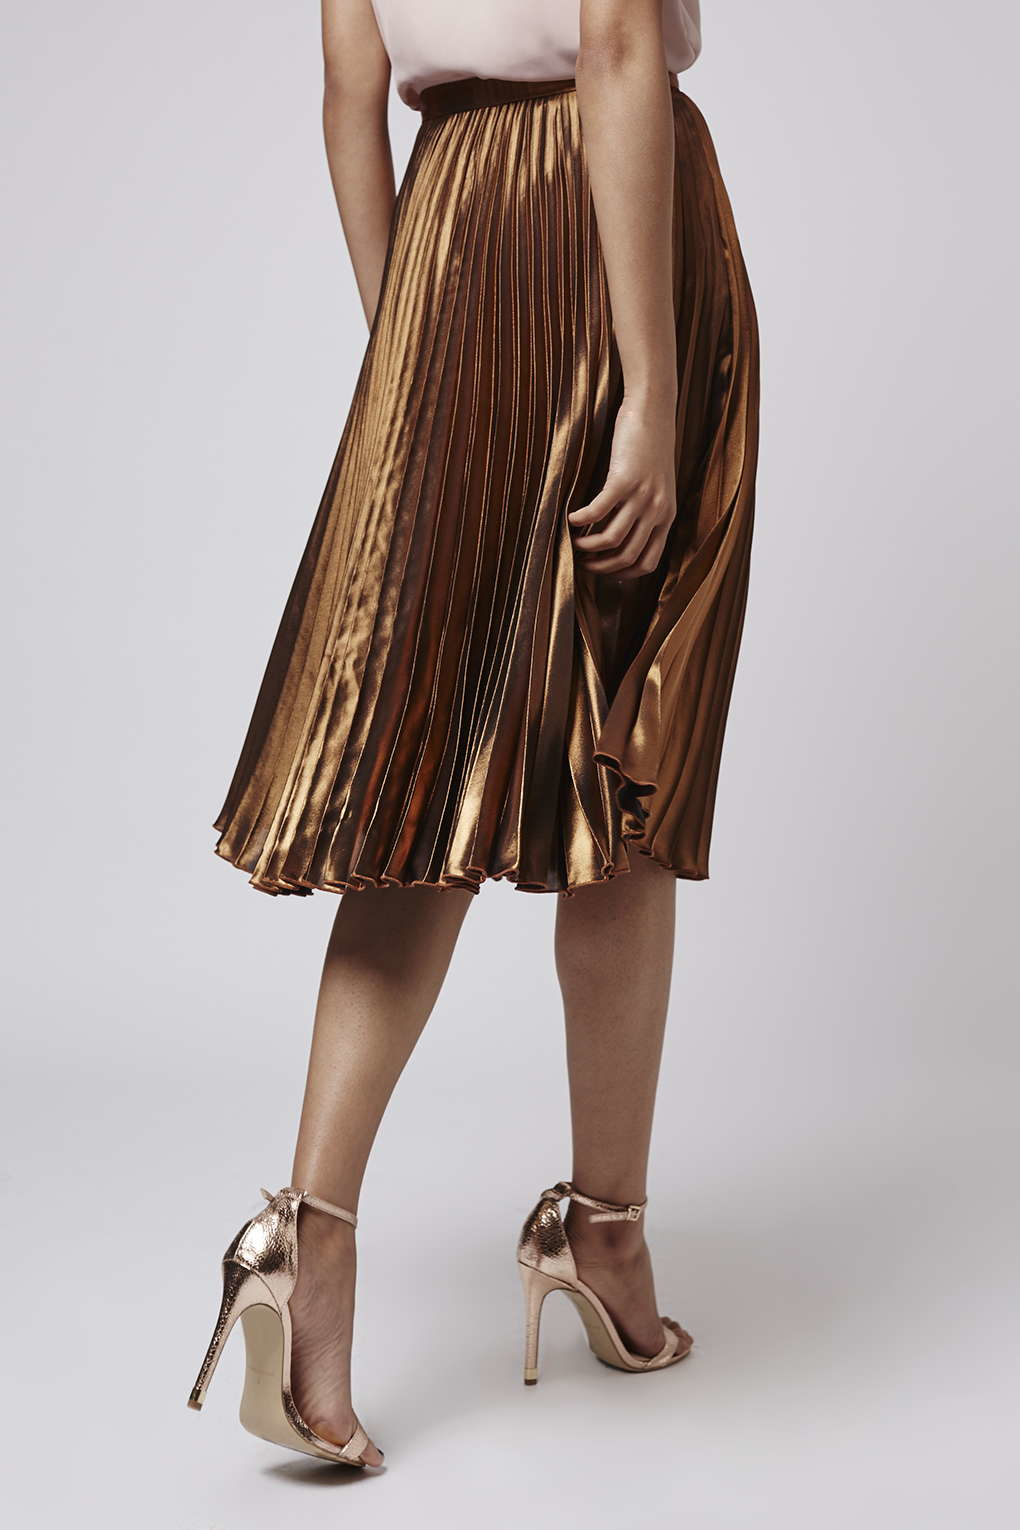 metallic pleated skirt uk,www 